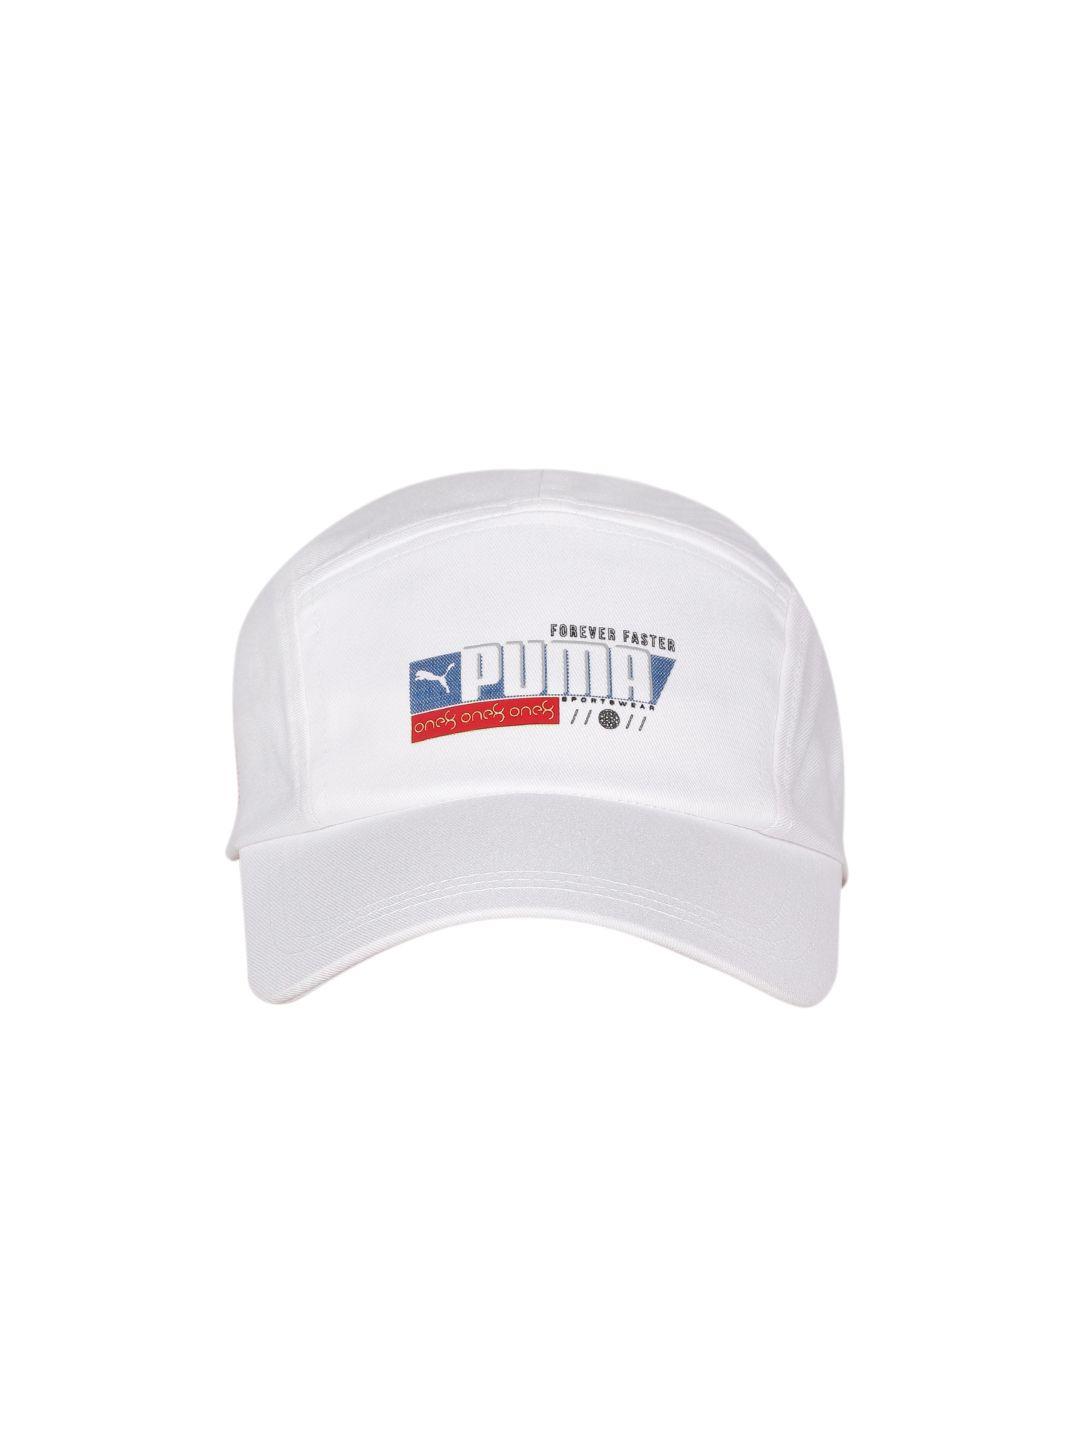 one8 x puma unisex graphic 5 panel brand logo printed baseball cap